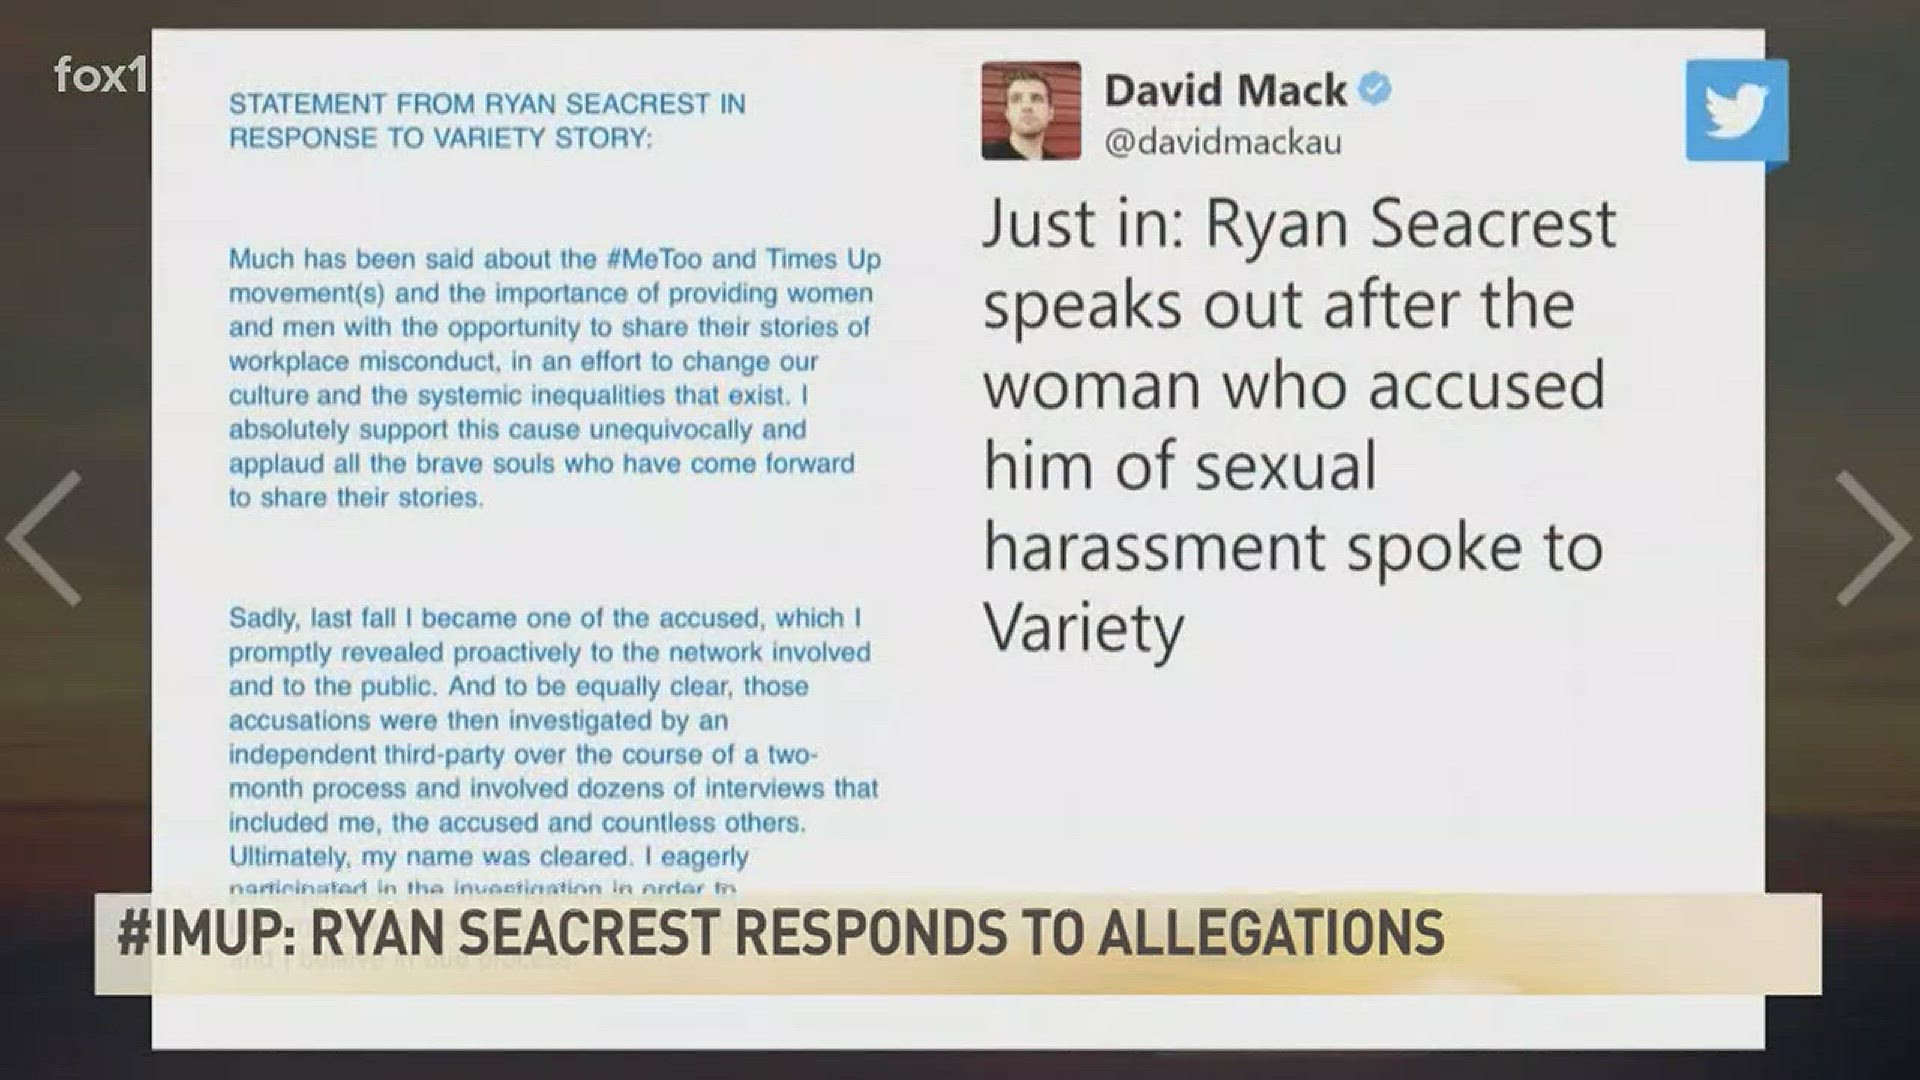 Ryan Seacrest denies allegations